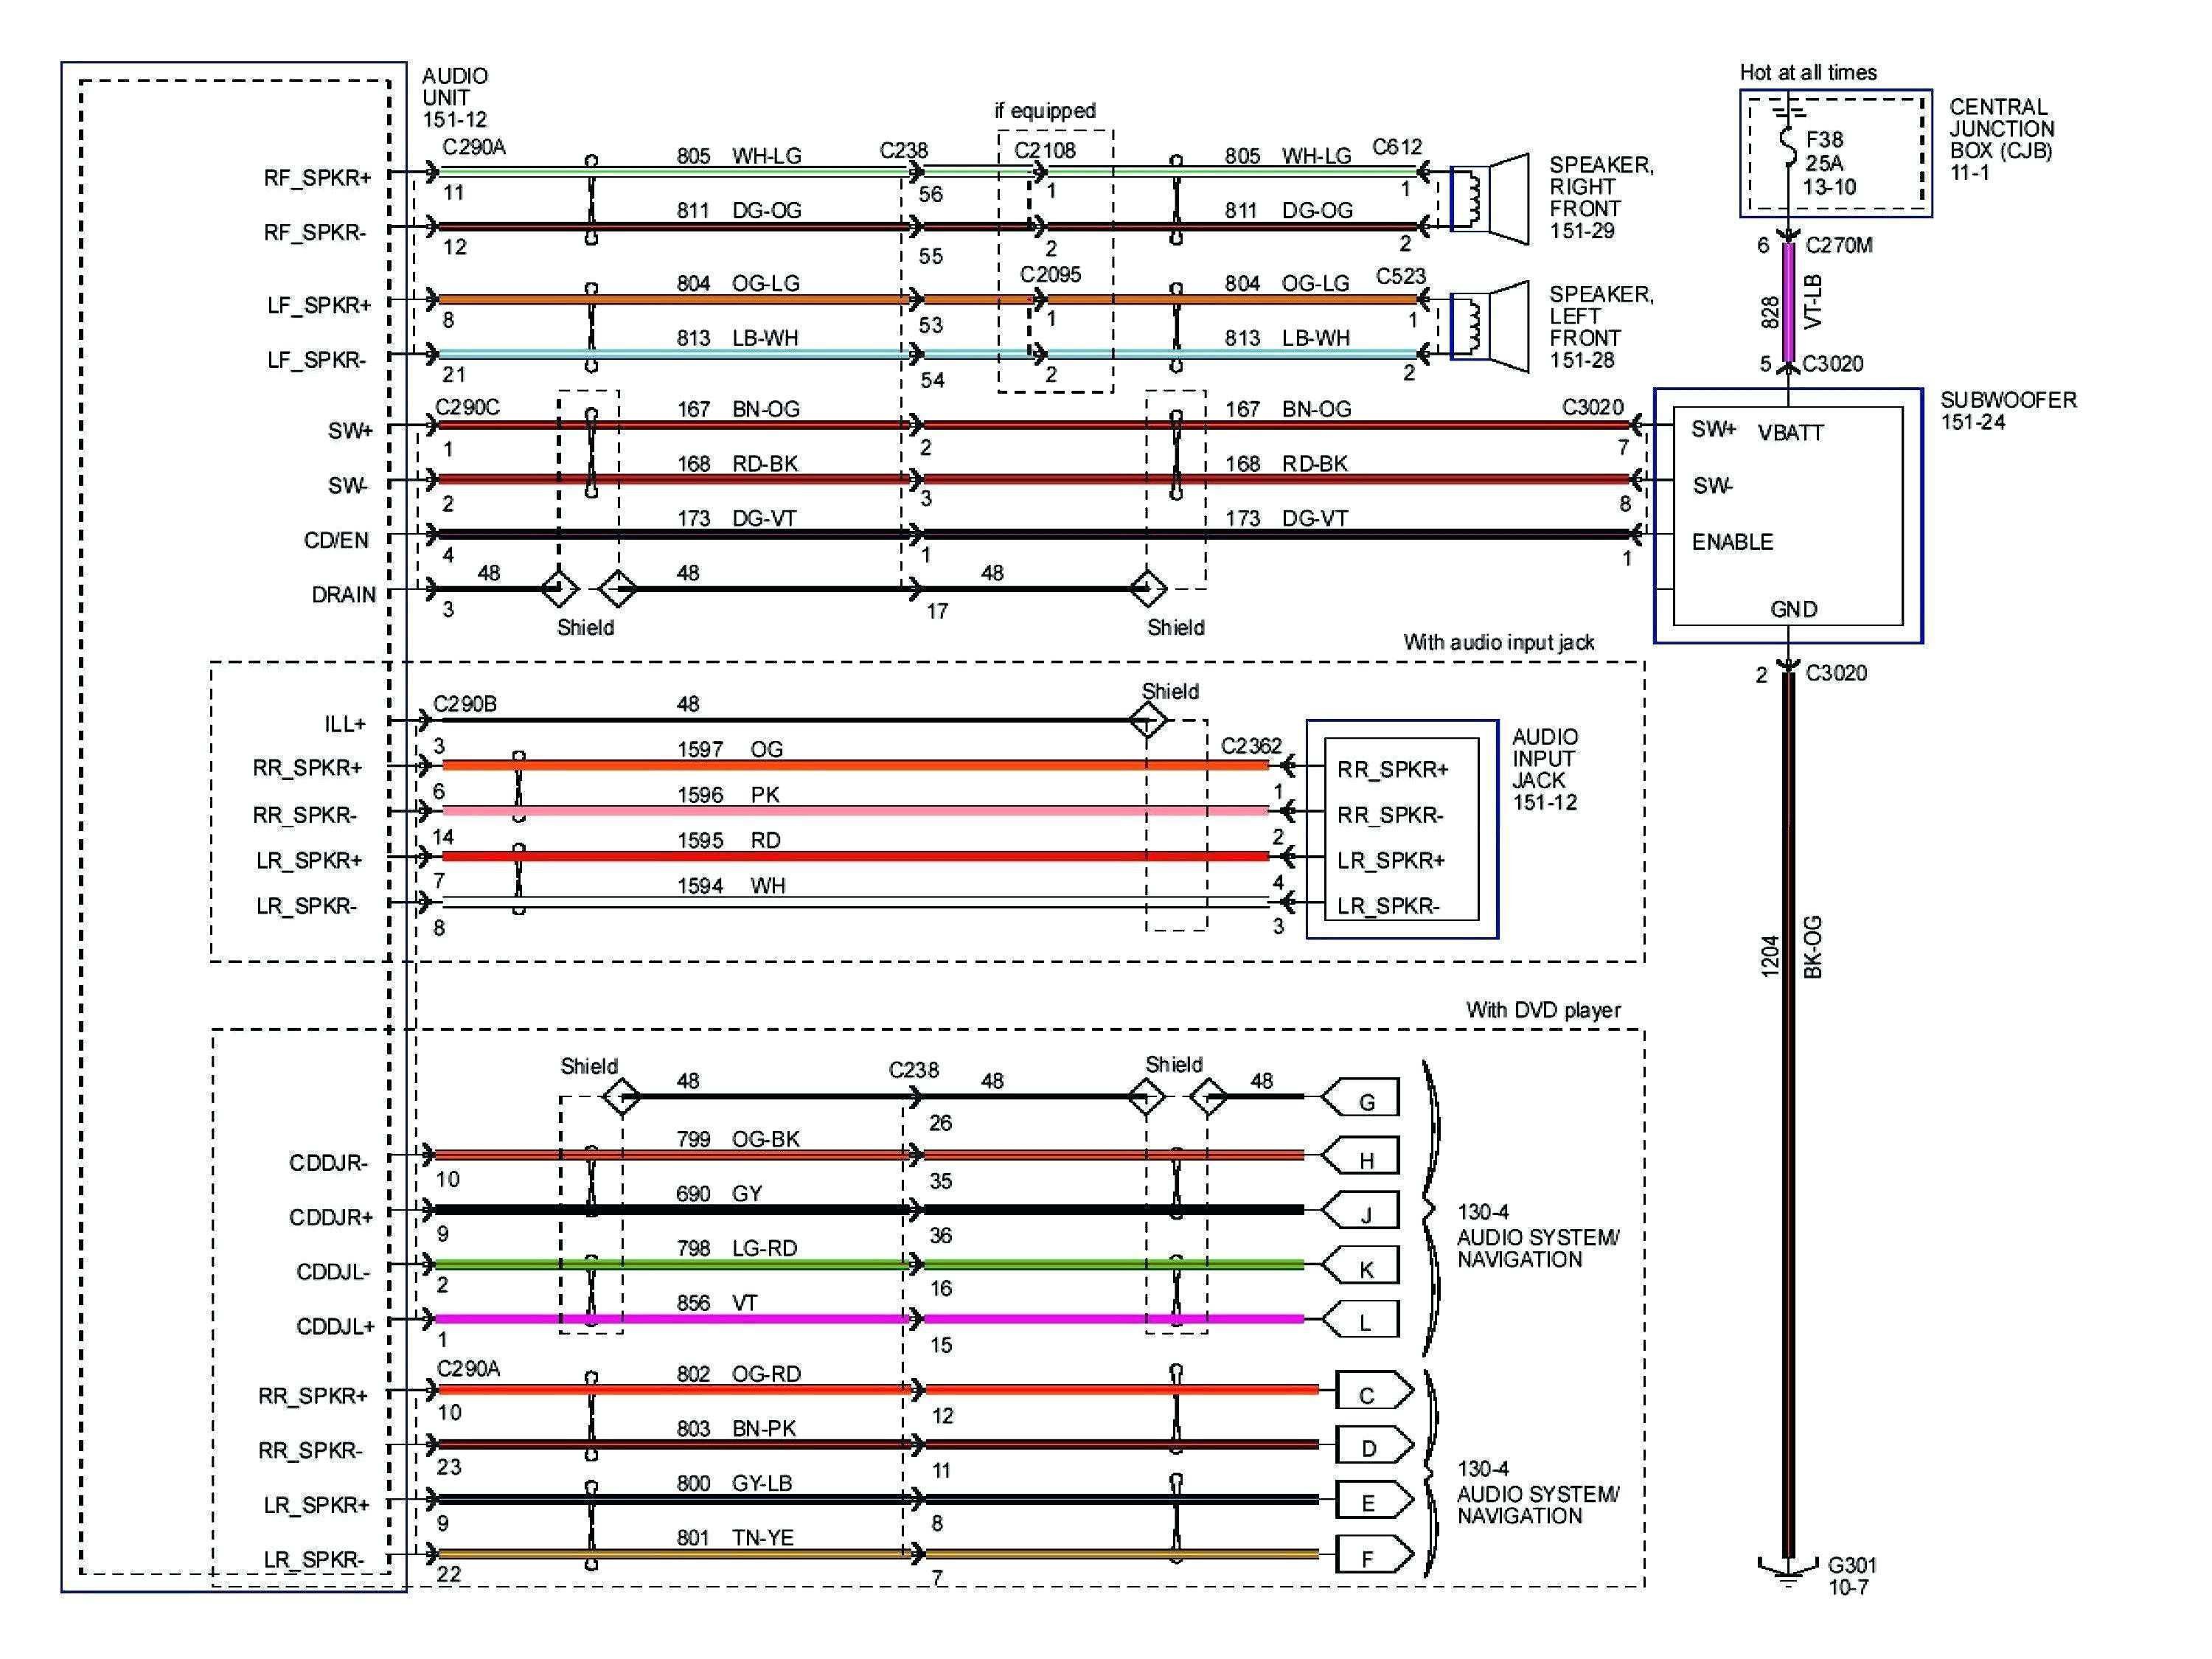 Car Audio Setup Diagram sony Car Stereo Wire Diagram Wiring Diagrams Konsult Of Car Audio Setup Diagram